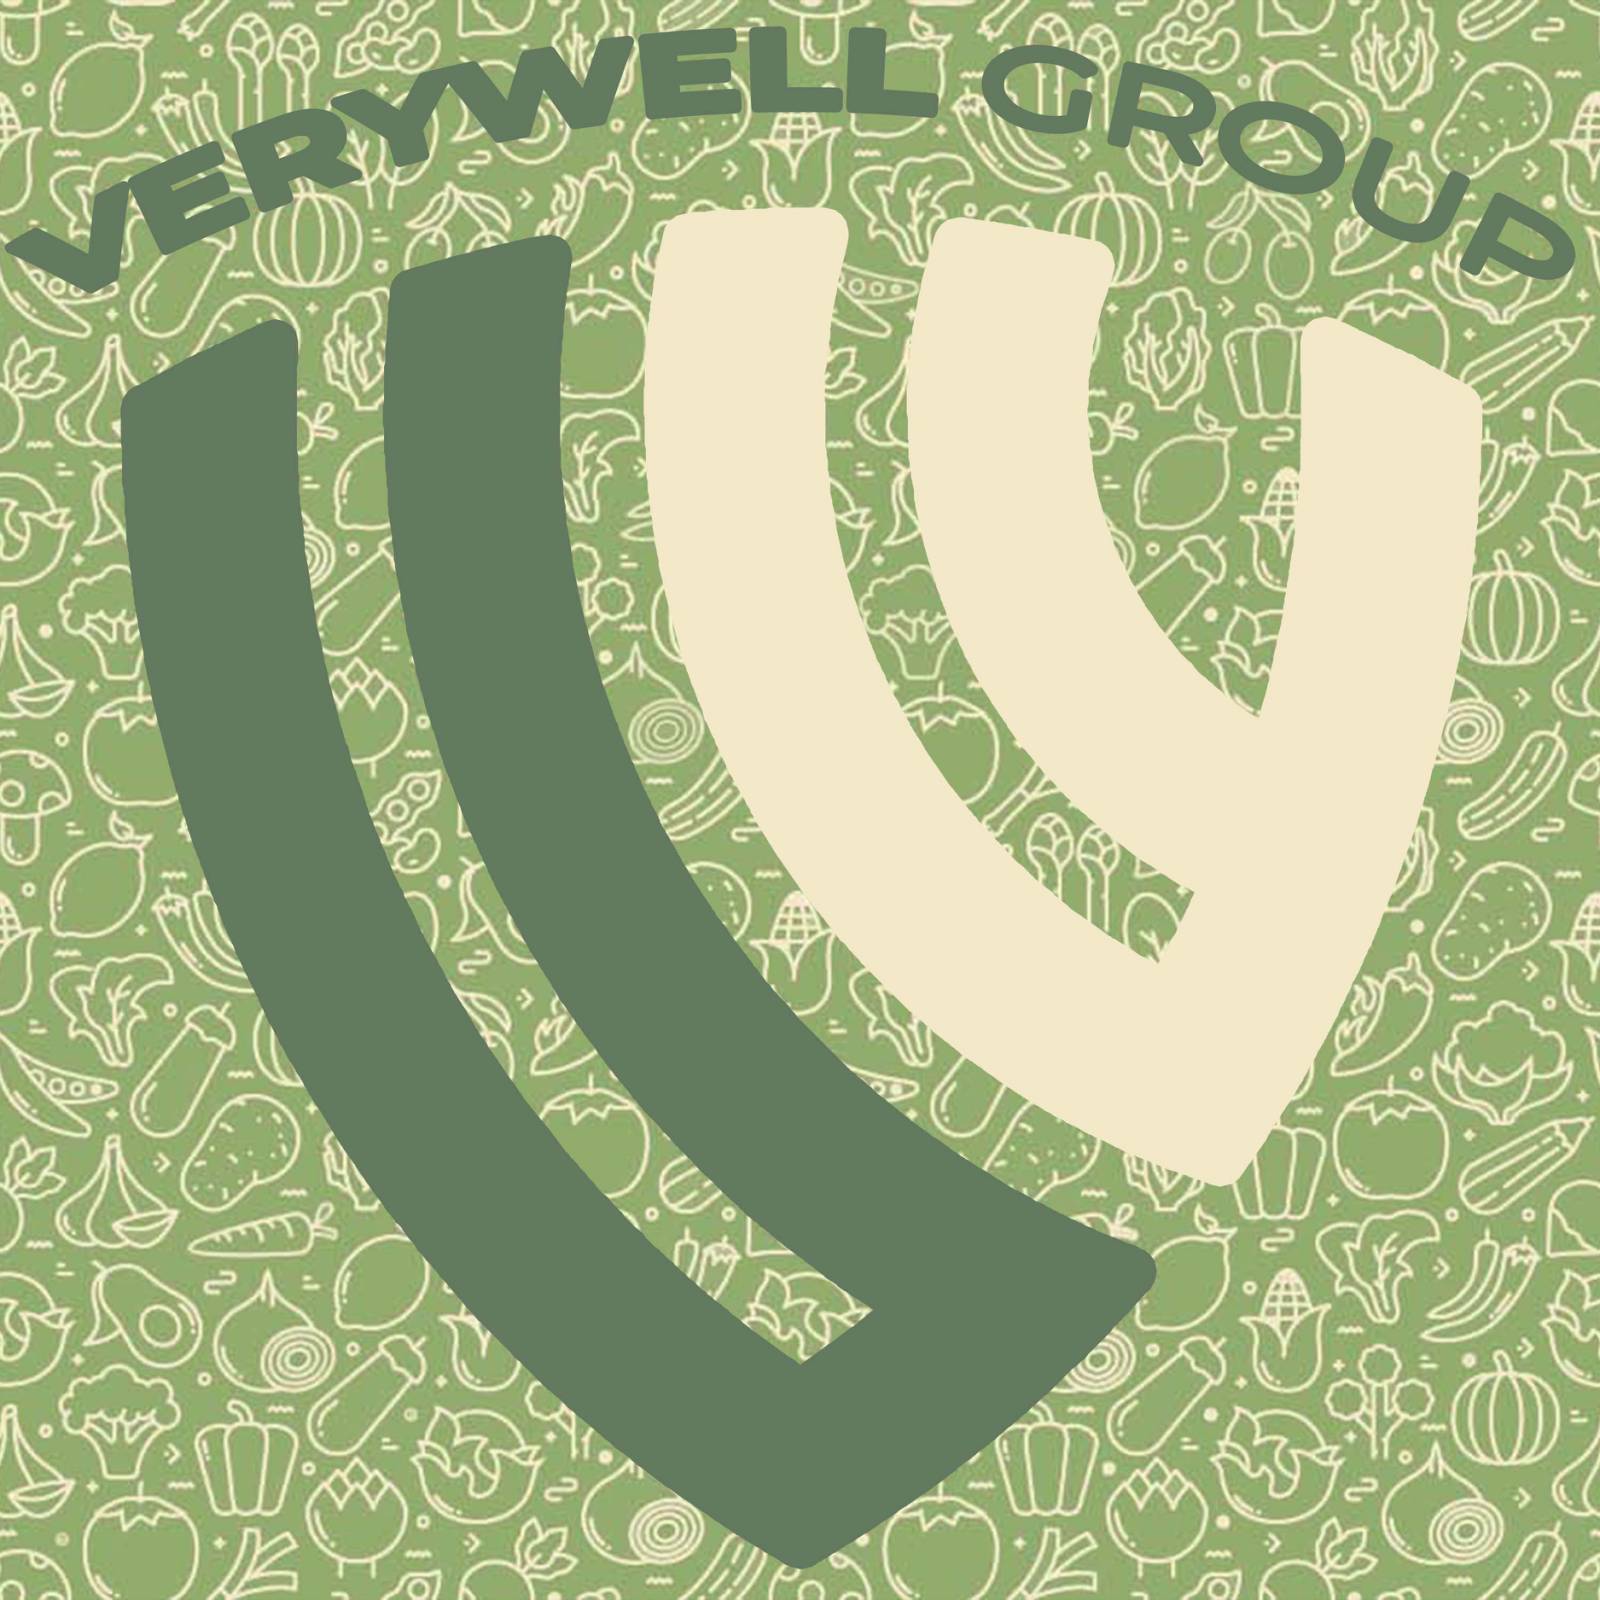 Verywellgroup